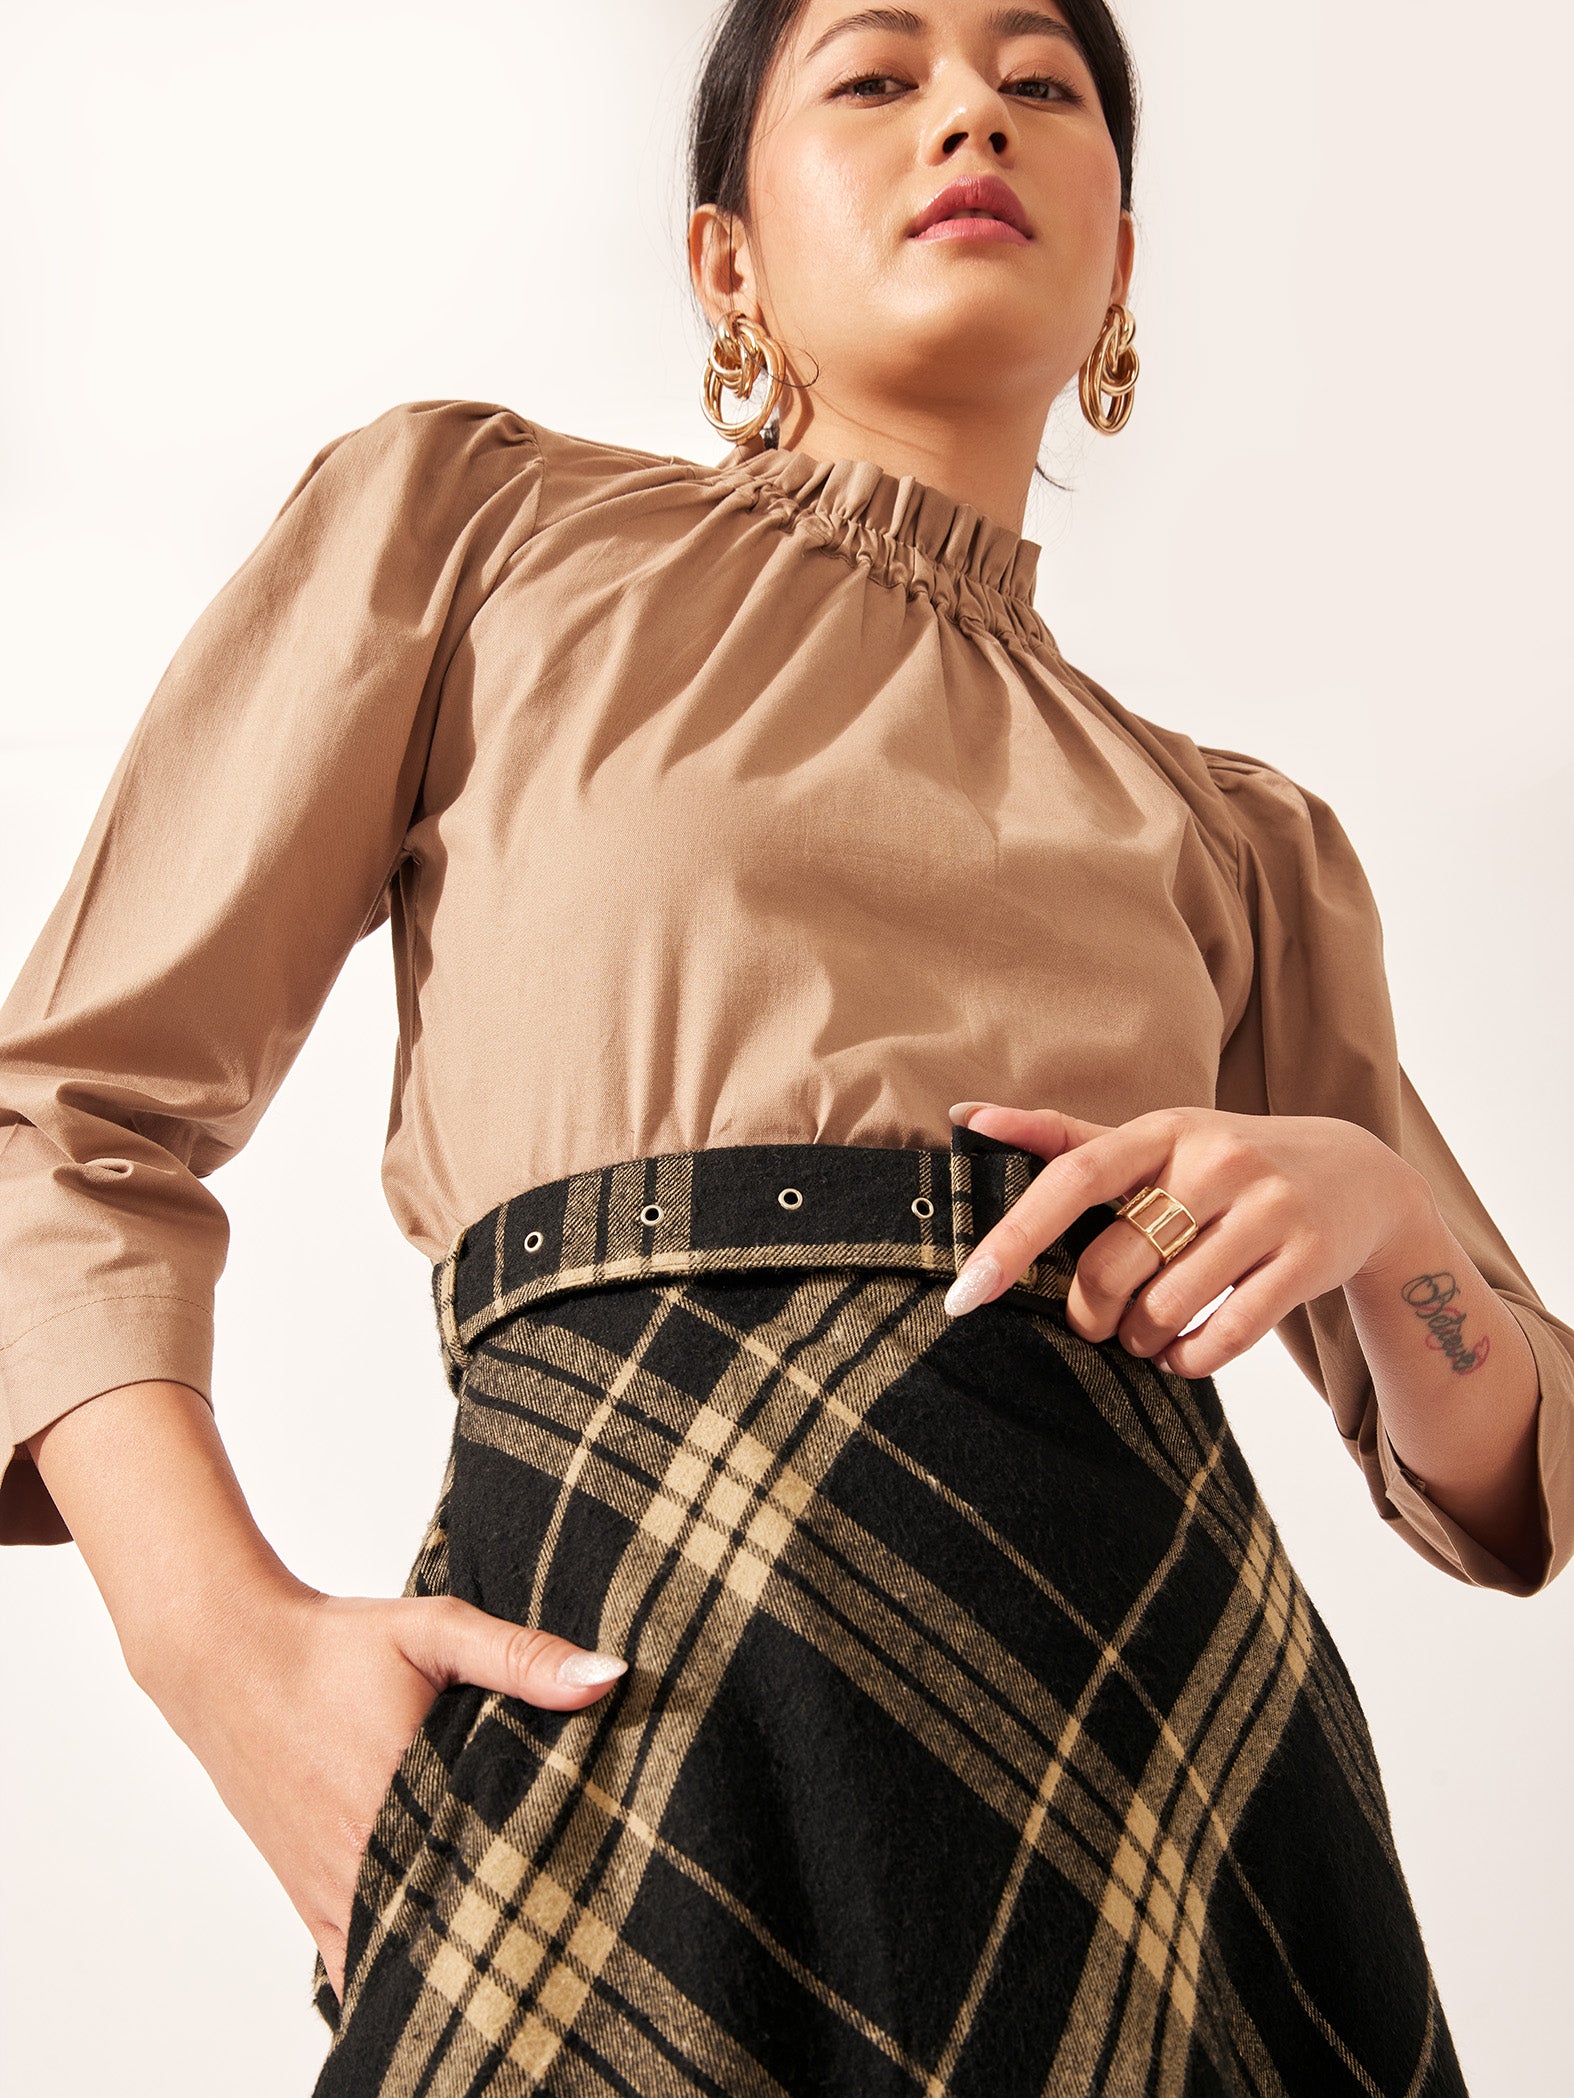 Monochrome Flannel Midi Skirt